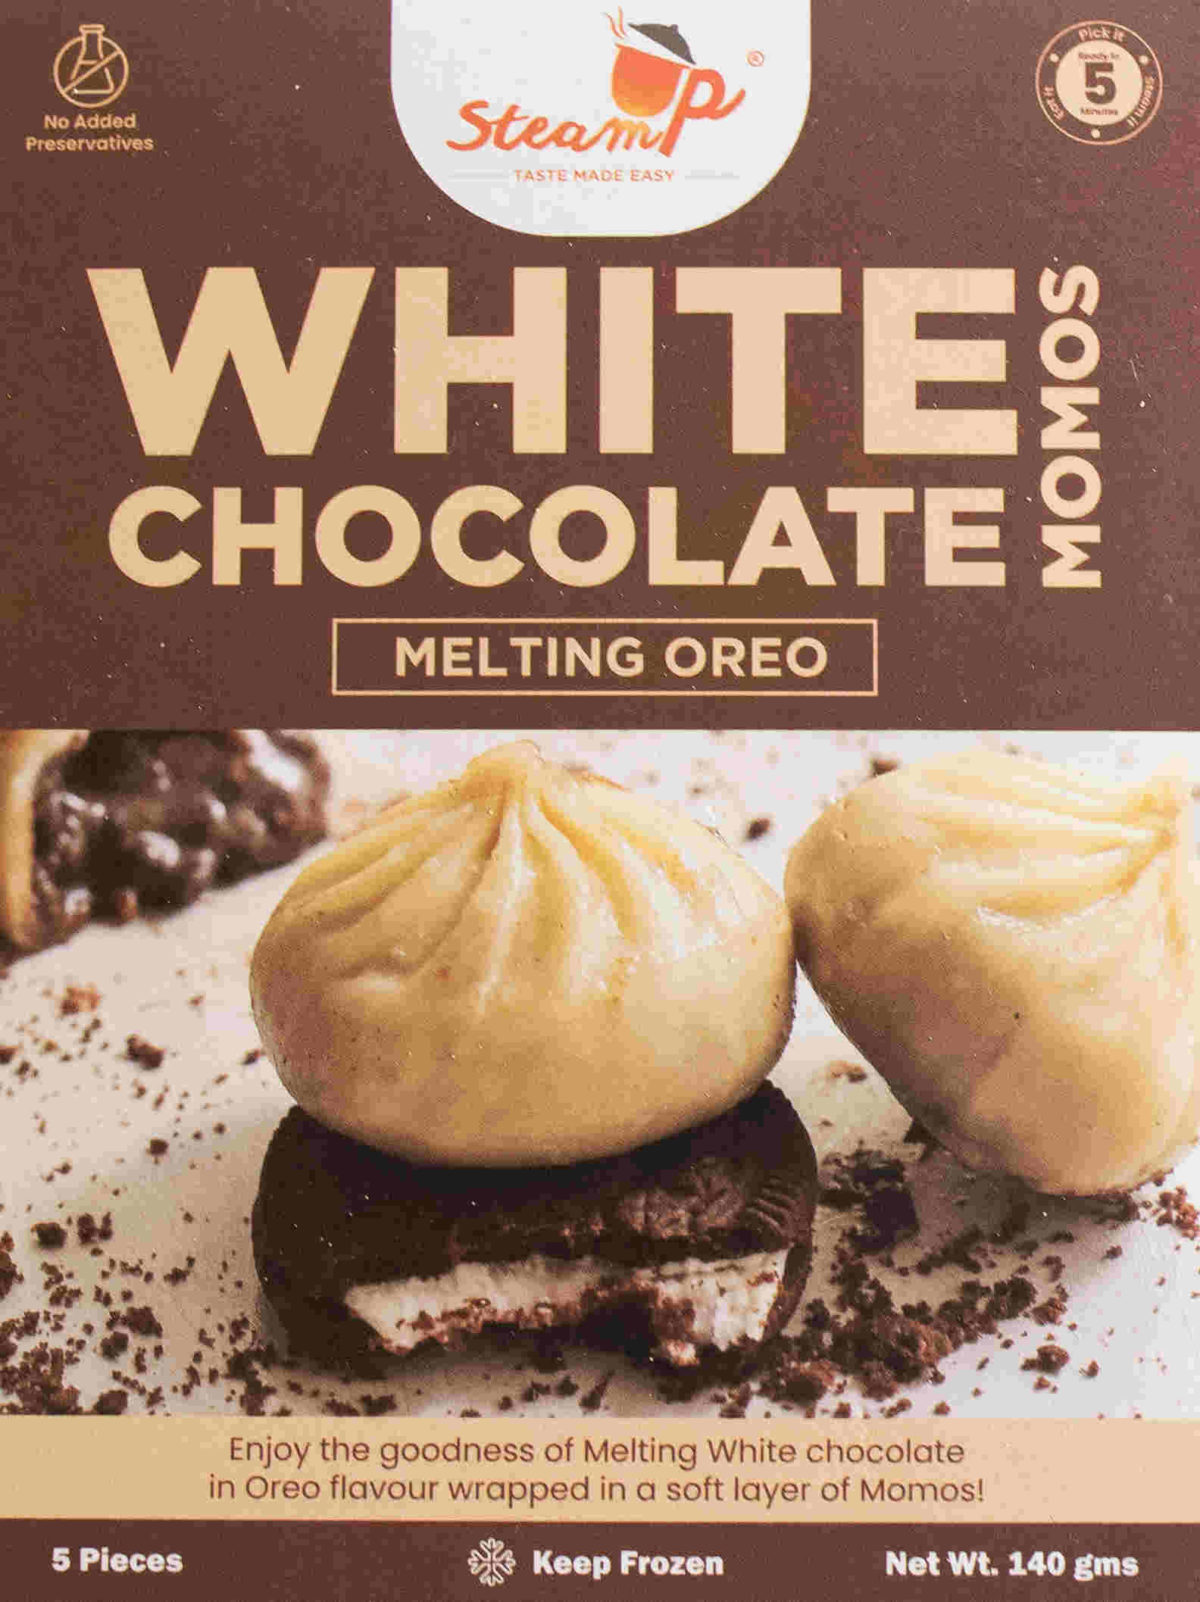 White Chocolate and Oreo crumbles stuffed into a Momo